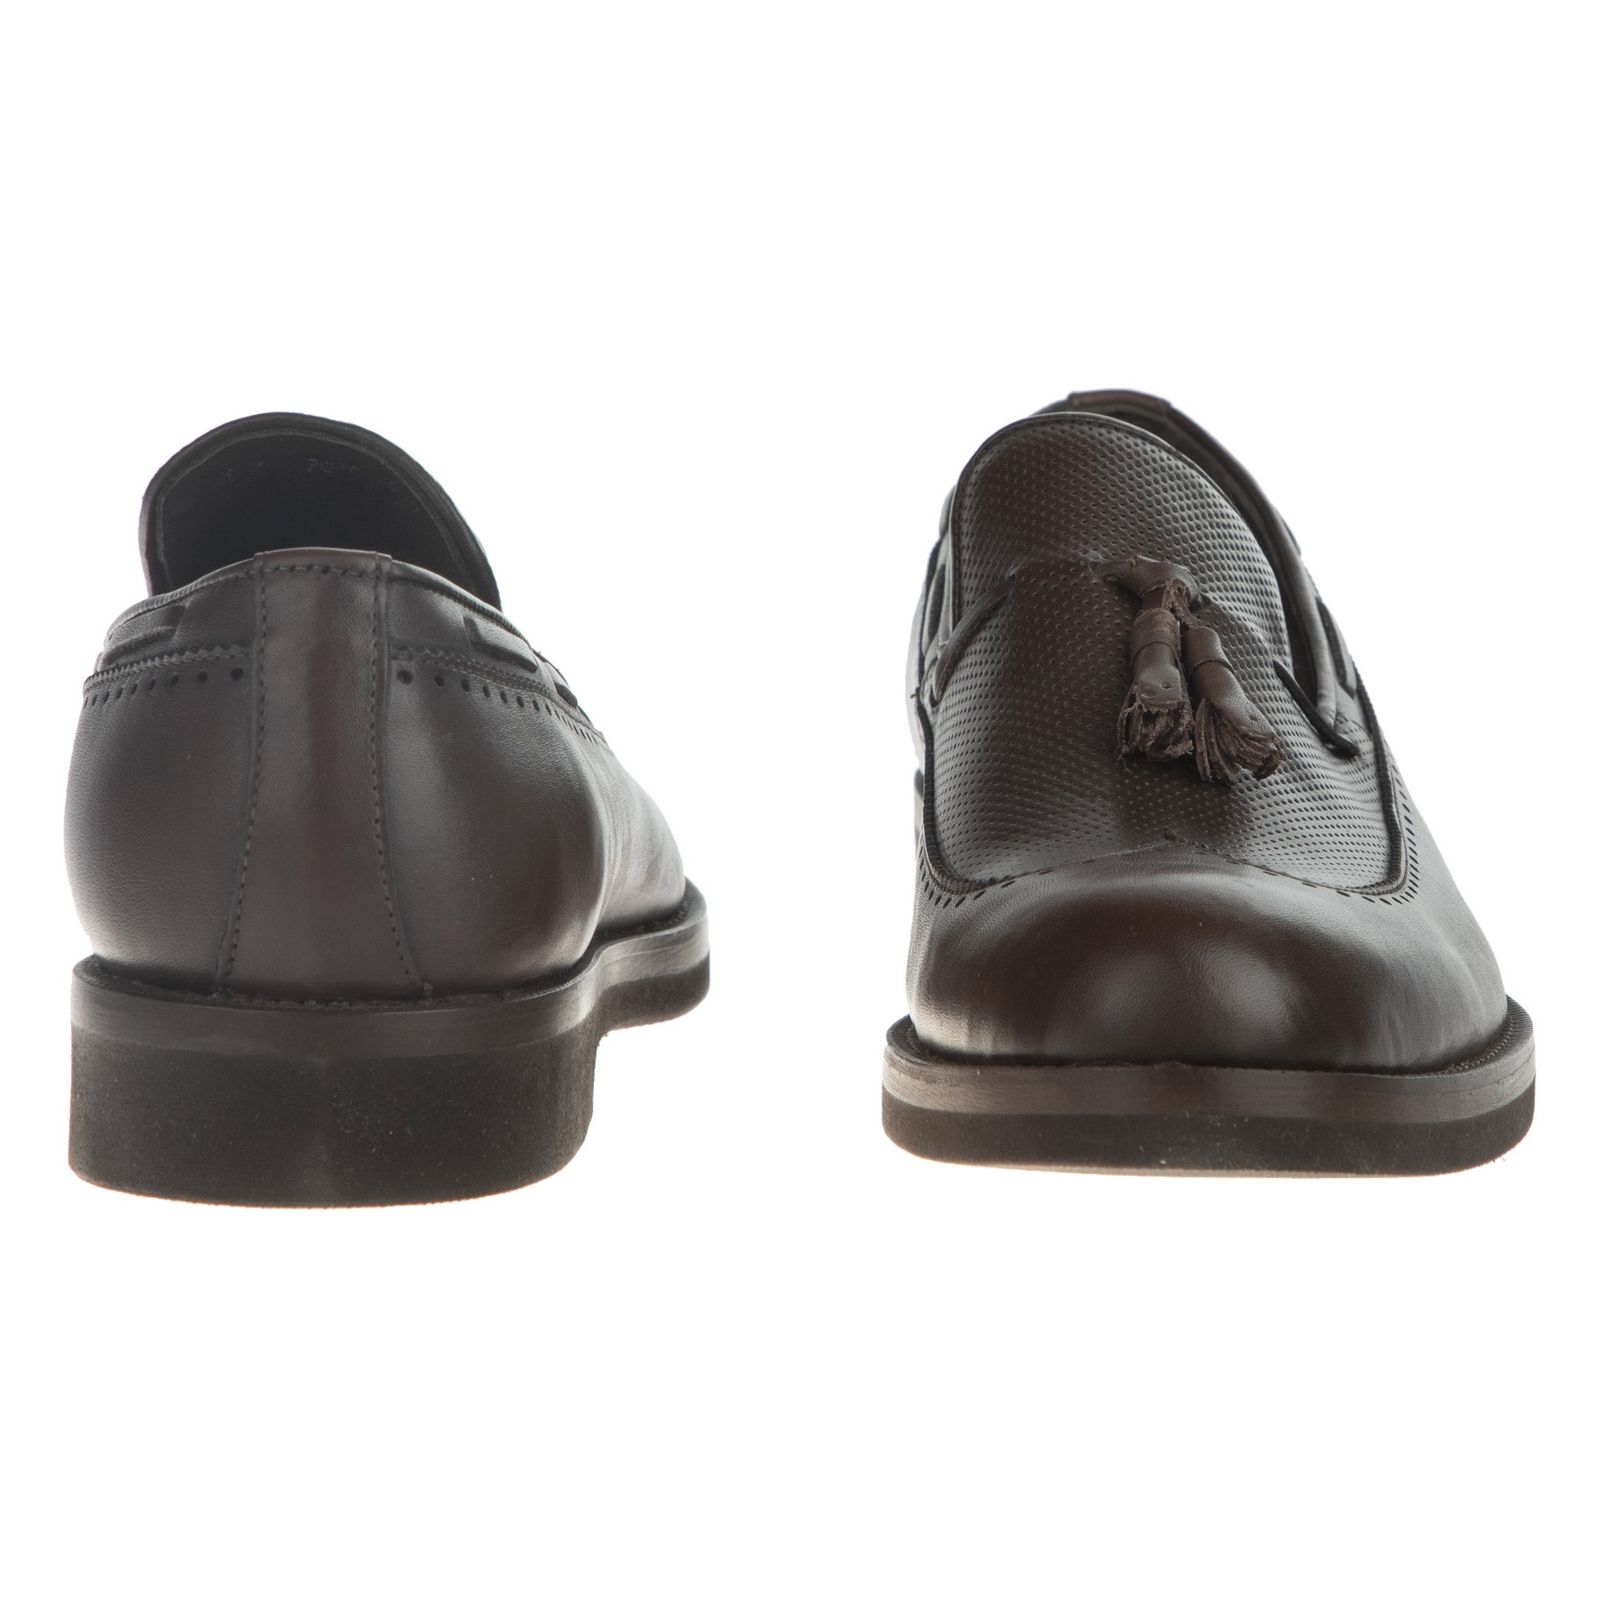 کفش مردانه بلوط مدل 7184A503-104 - قهوه ای - 4